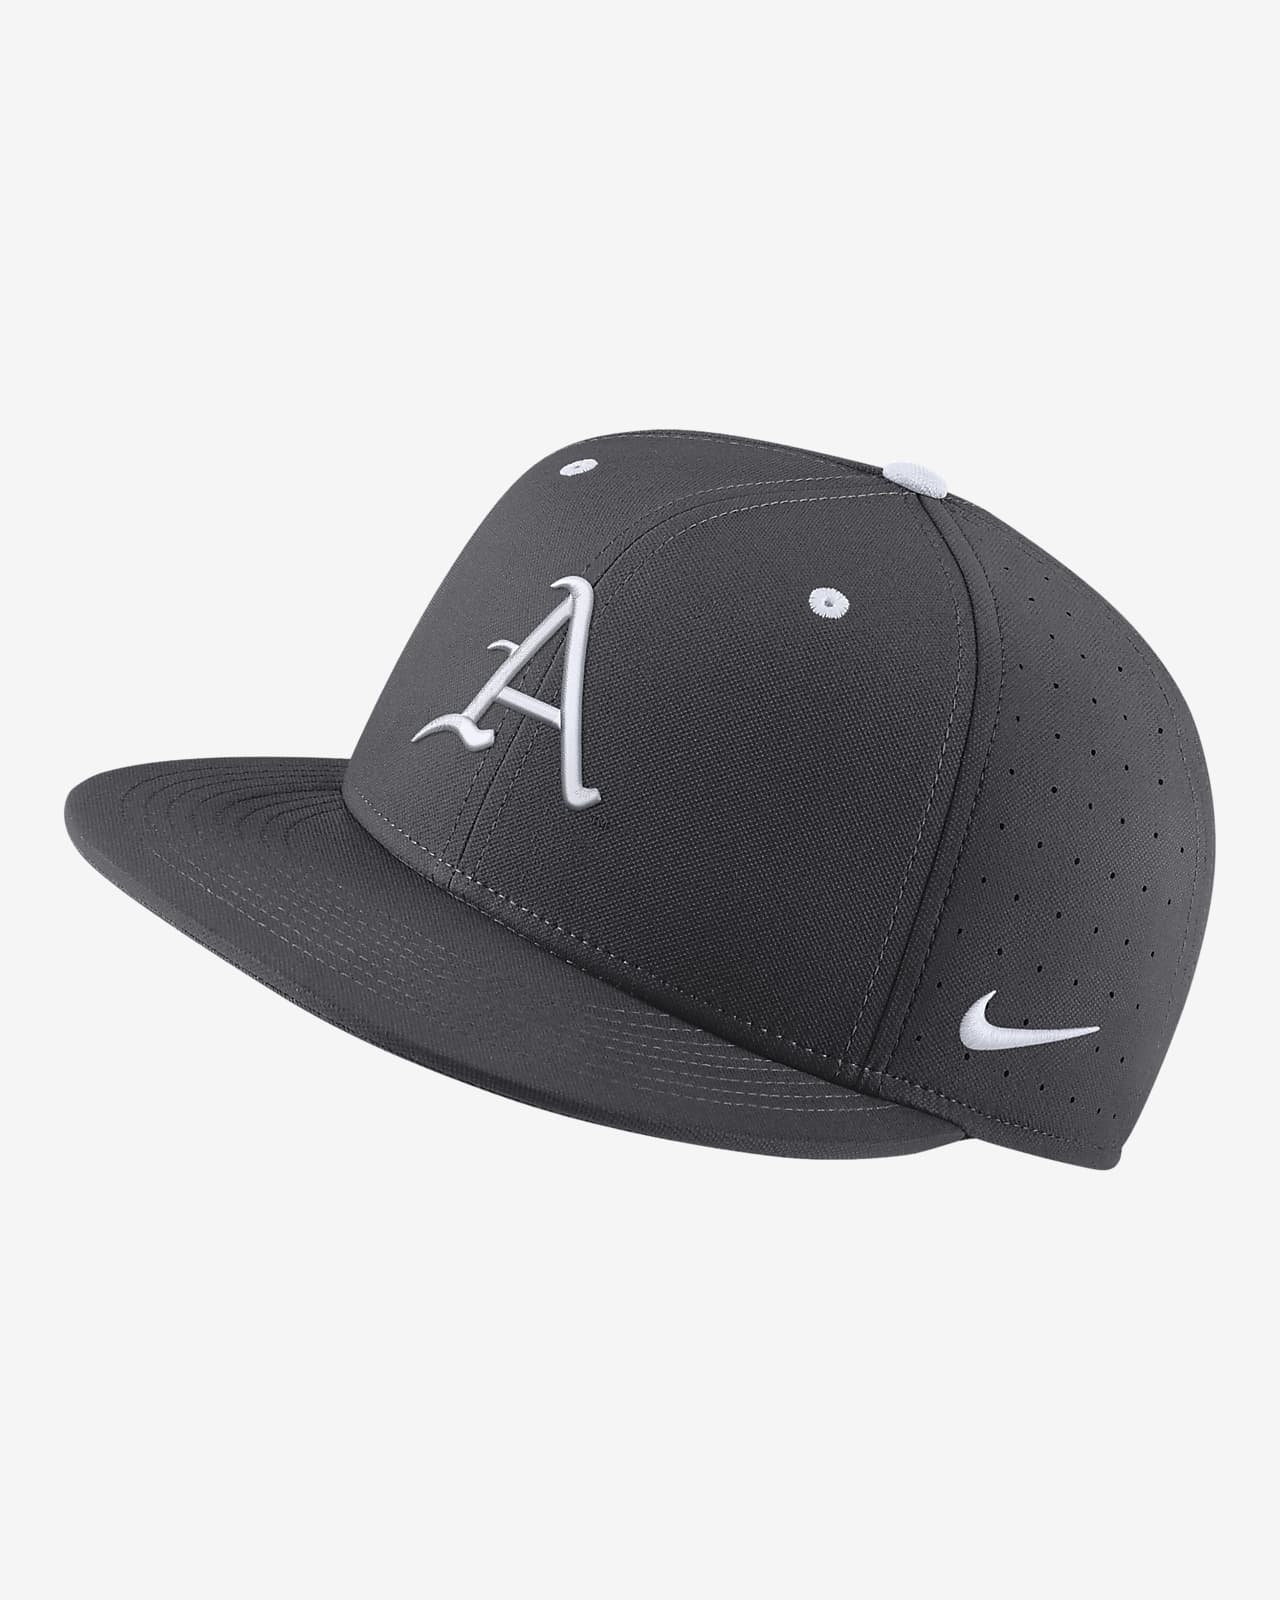 Arkansas Nike College Fitted Baseball Hat